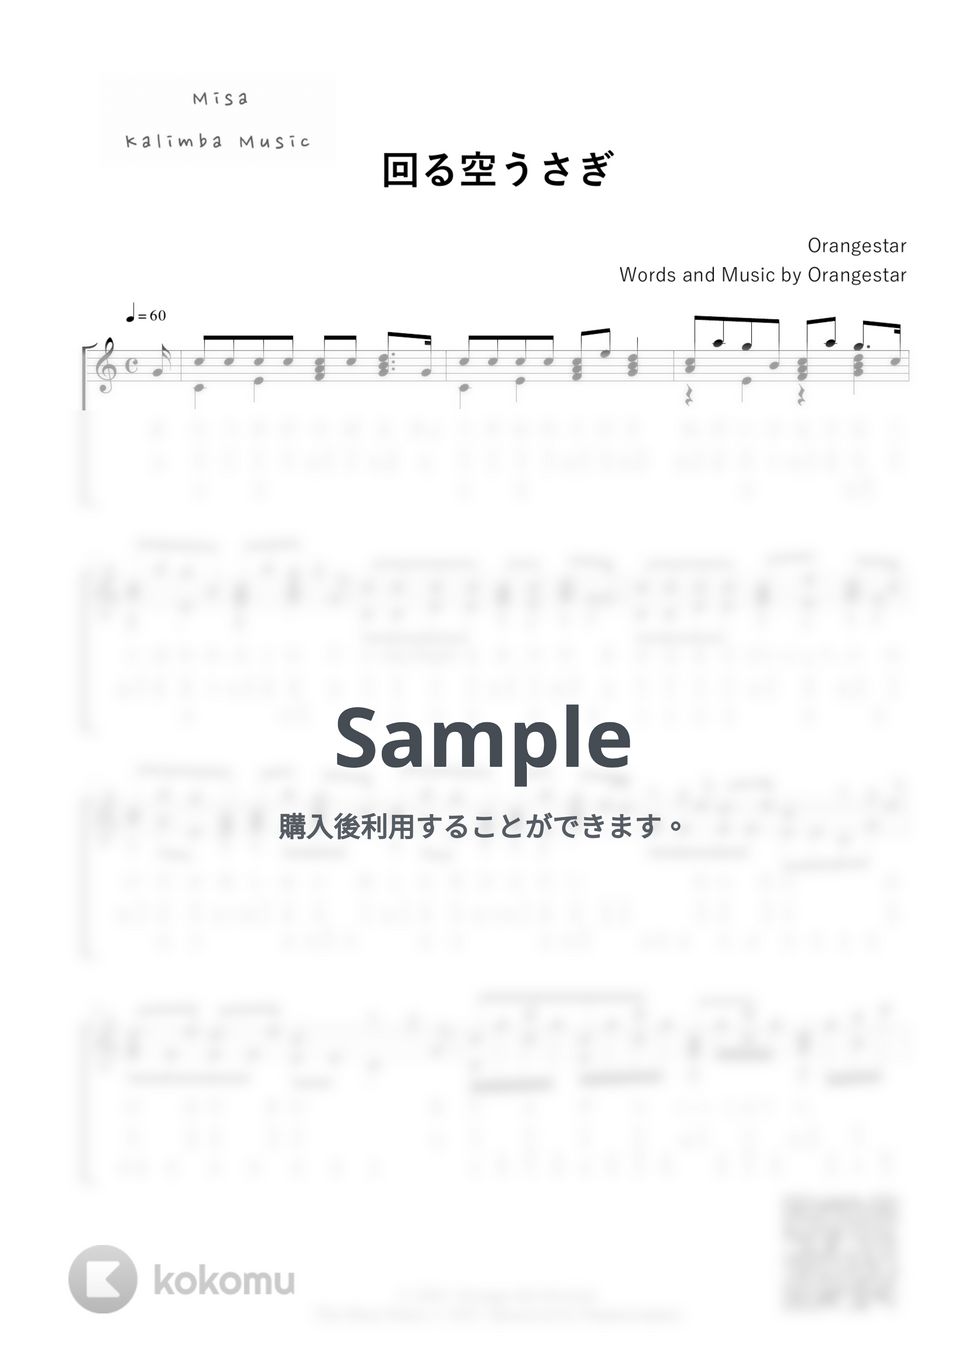 Orangestar - 回る空うさぎ / 17音カリンバ / 数字音名表記 (歌詞付き/ 模範演奏付き) by Misa / Kalimba Music